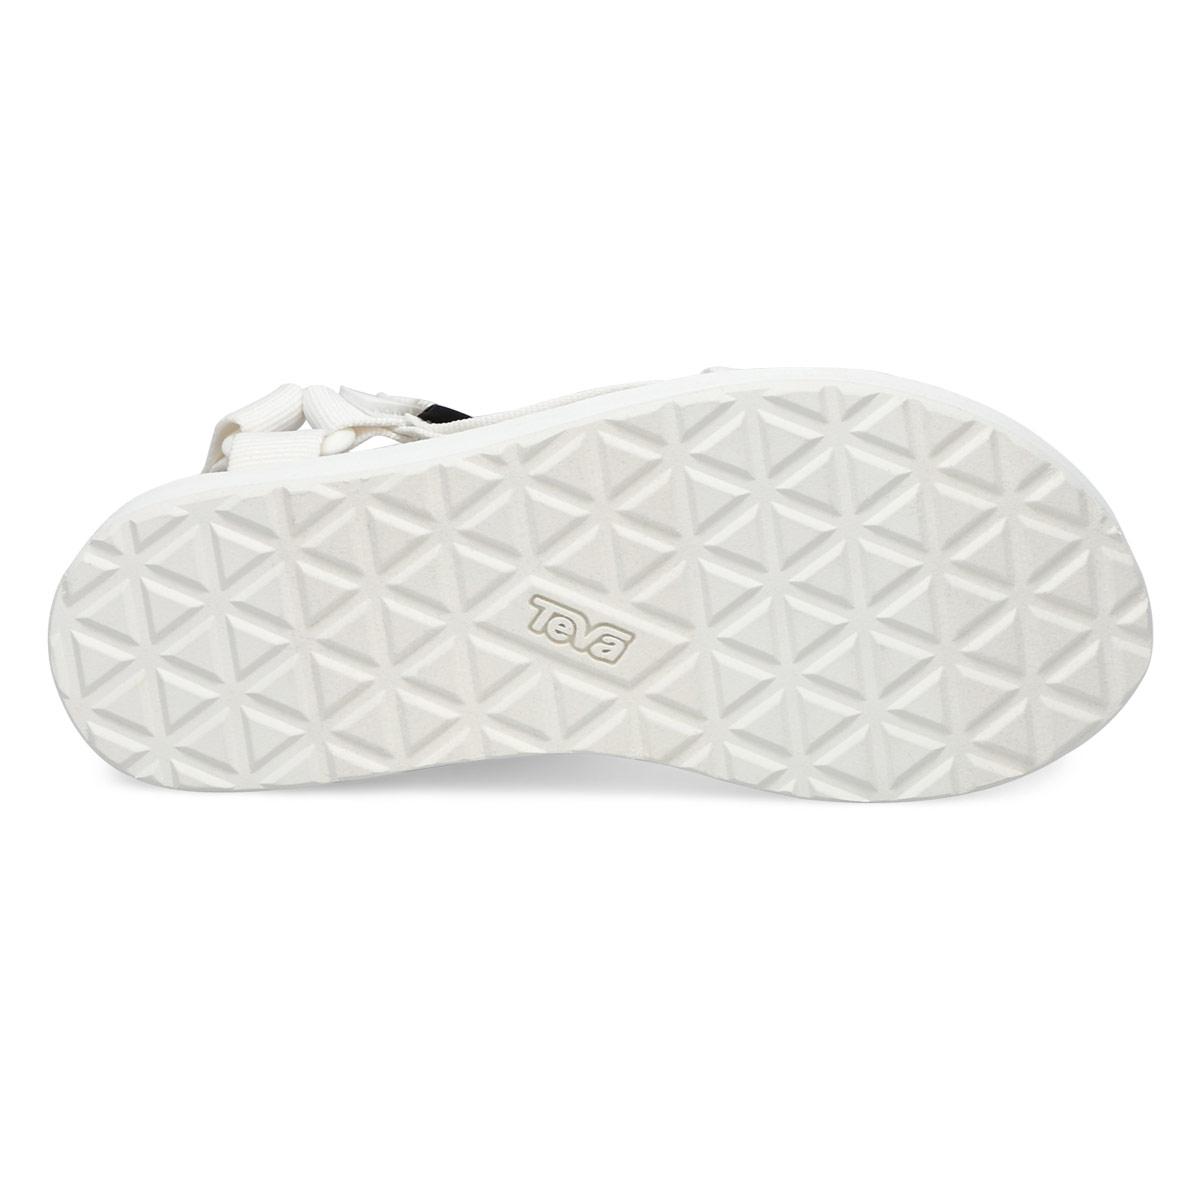 Women's Original Universal Sport Sandal - White